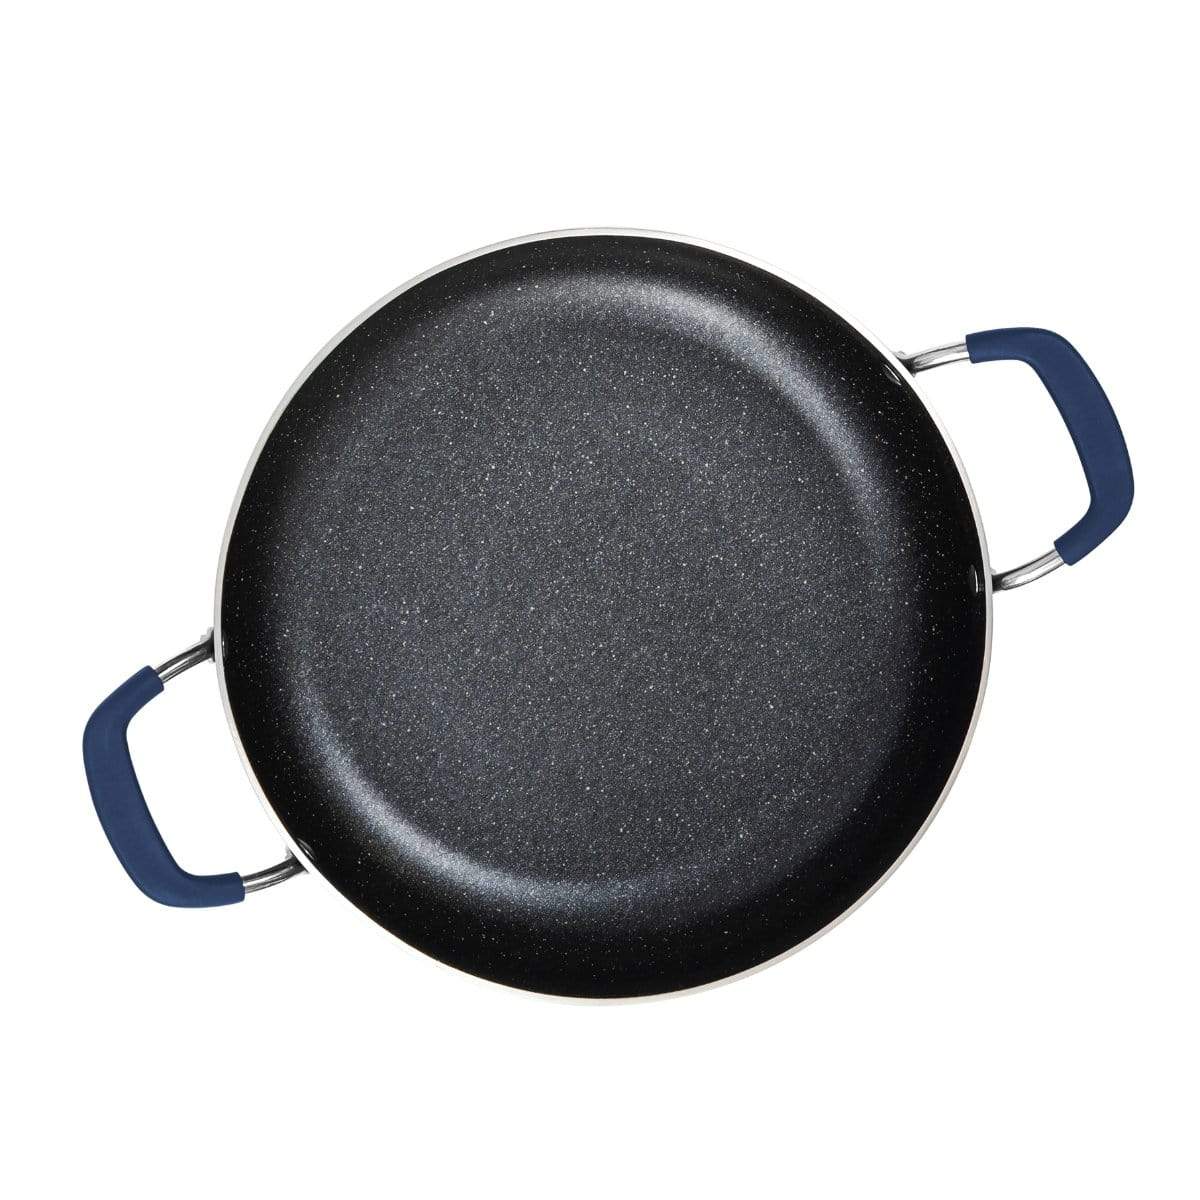 GraniteStone Diamond Non-Stick 5 Qt. Everyday Pan with Steamer